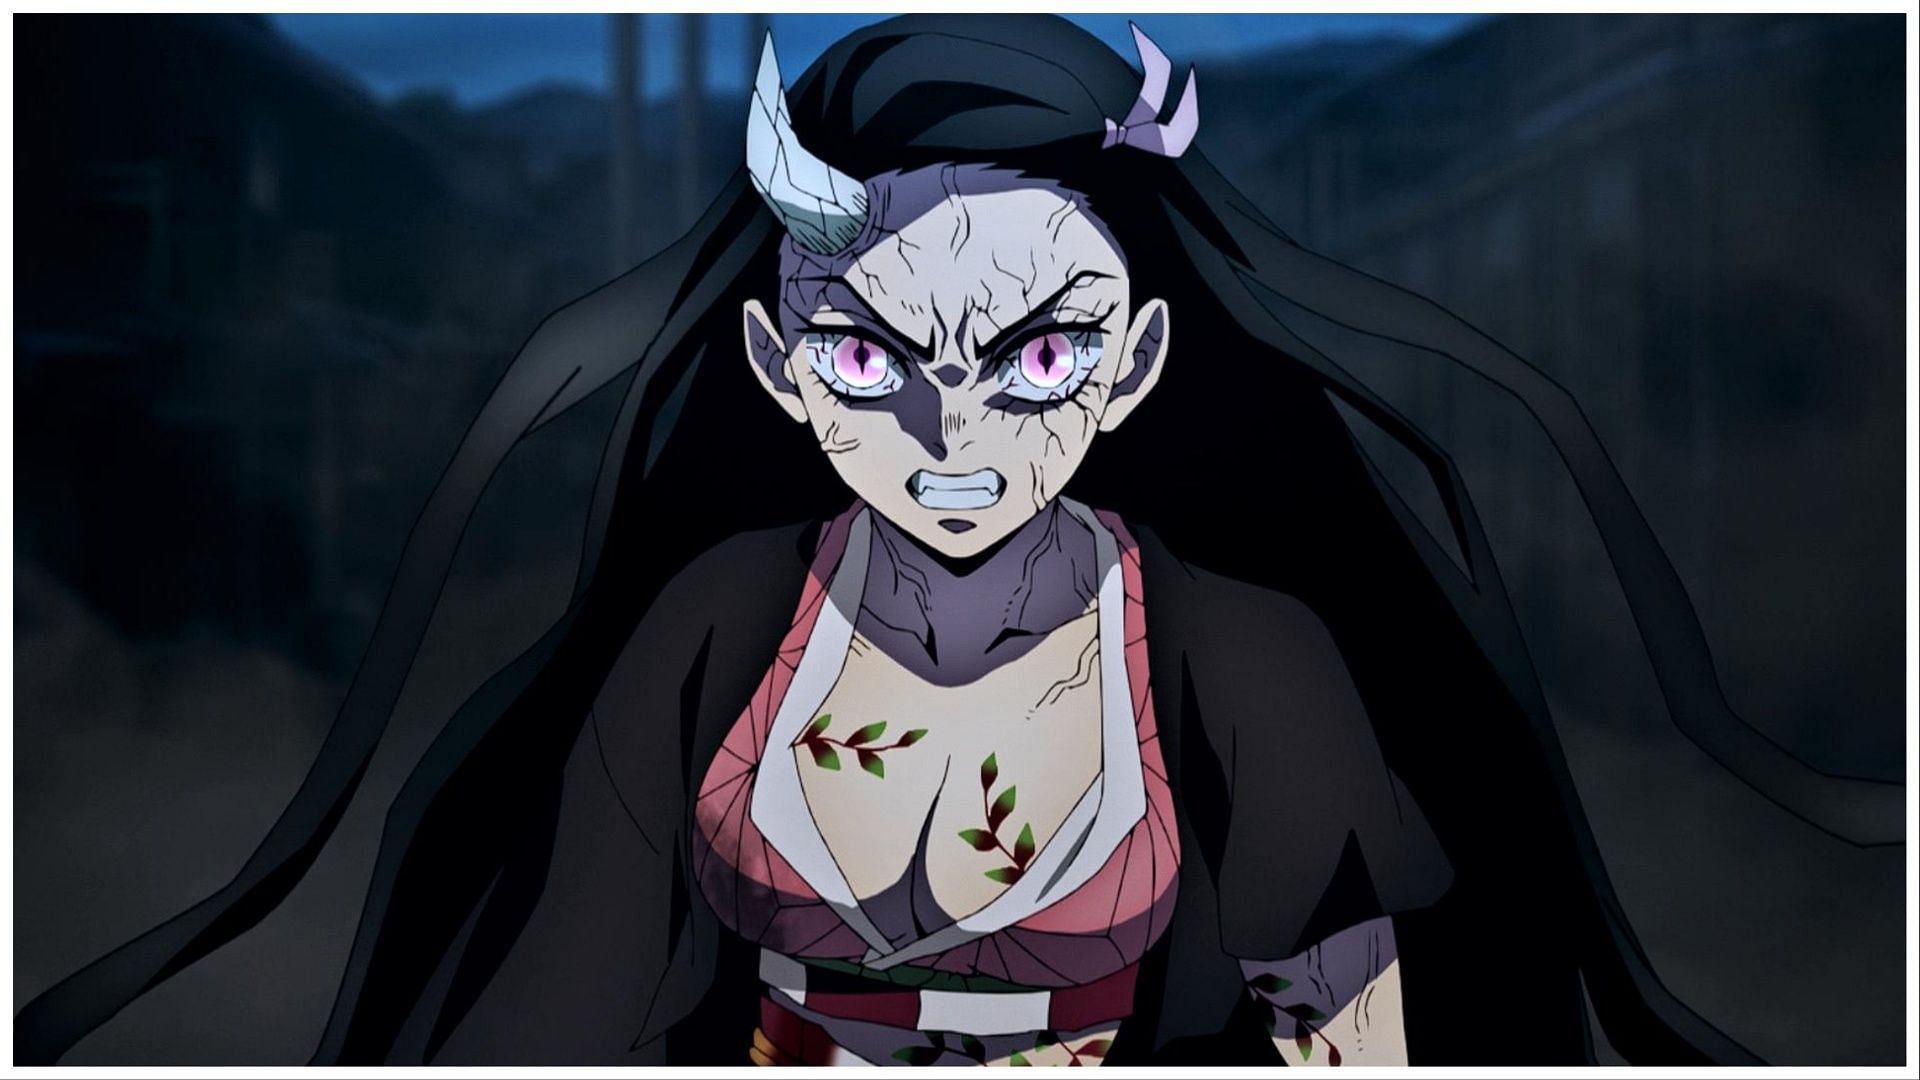 Nezuko Kamado as depicted in the anime (Image via Ufotable)